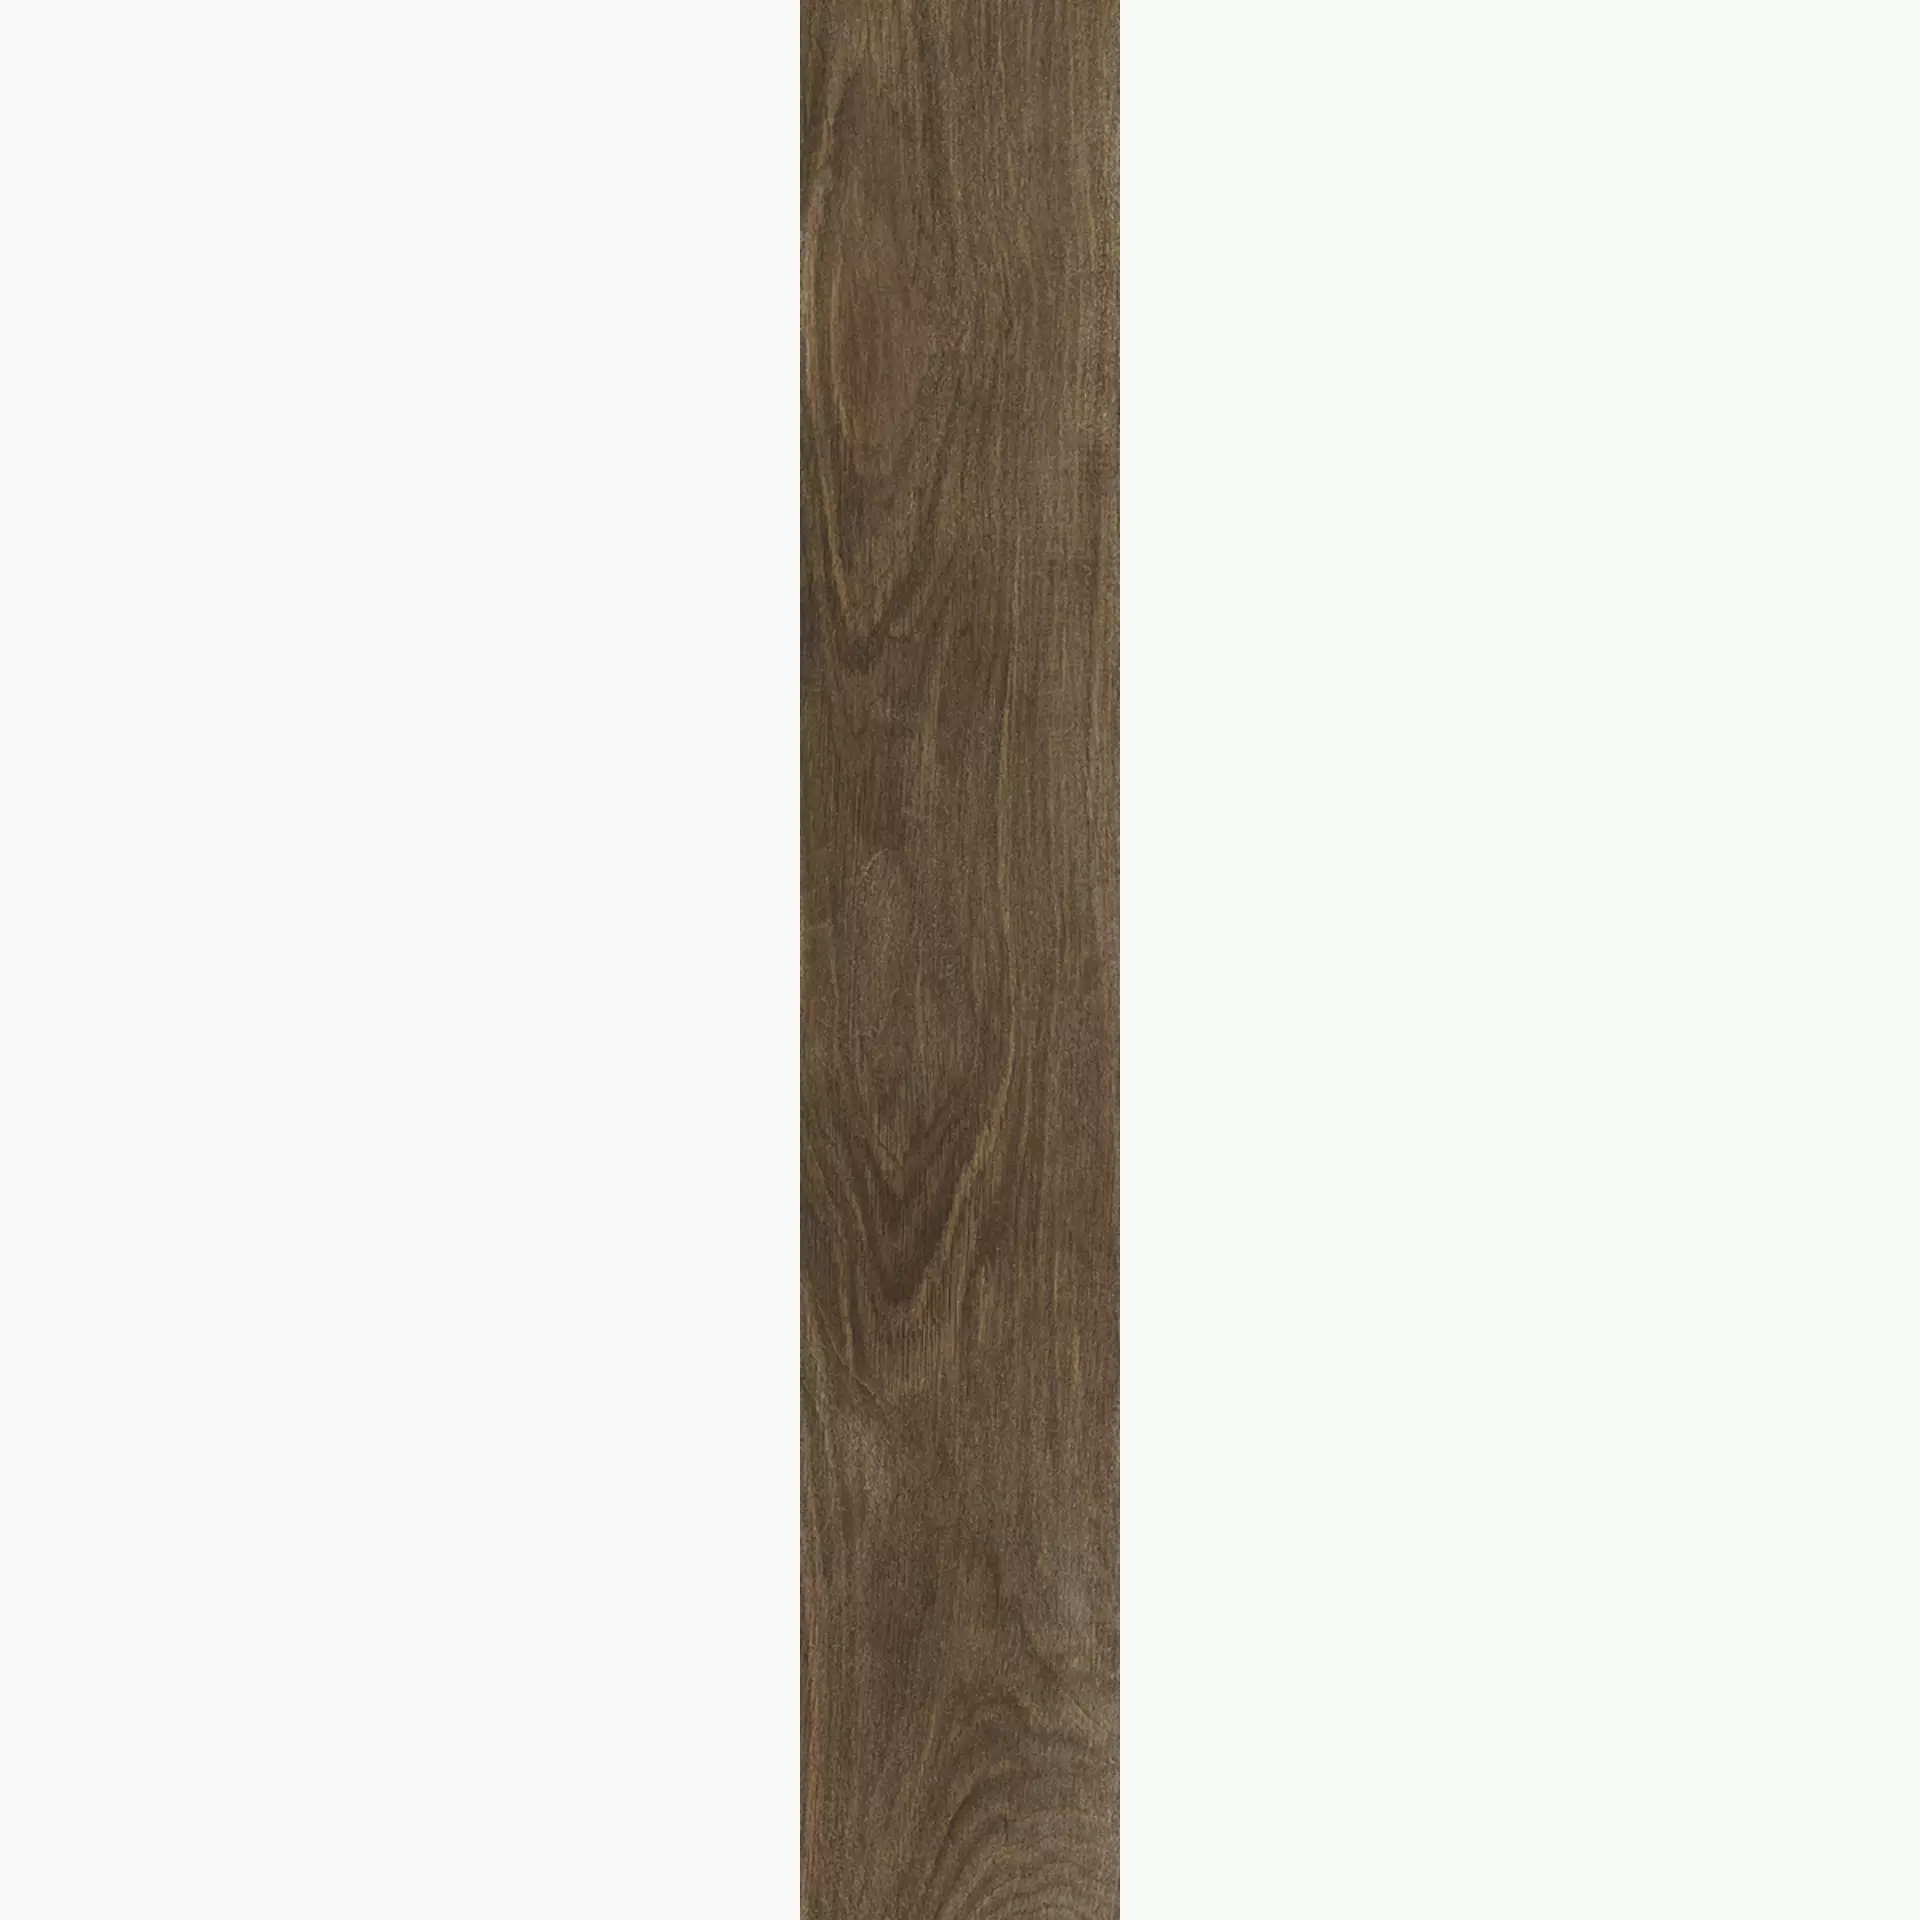 Rondine Greenwood Bruno Naturale J86332 7,5x45cm 9,5mm